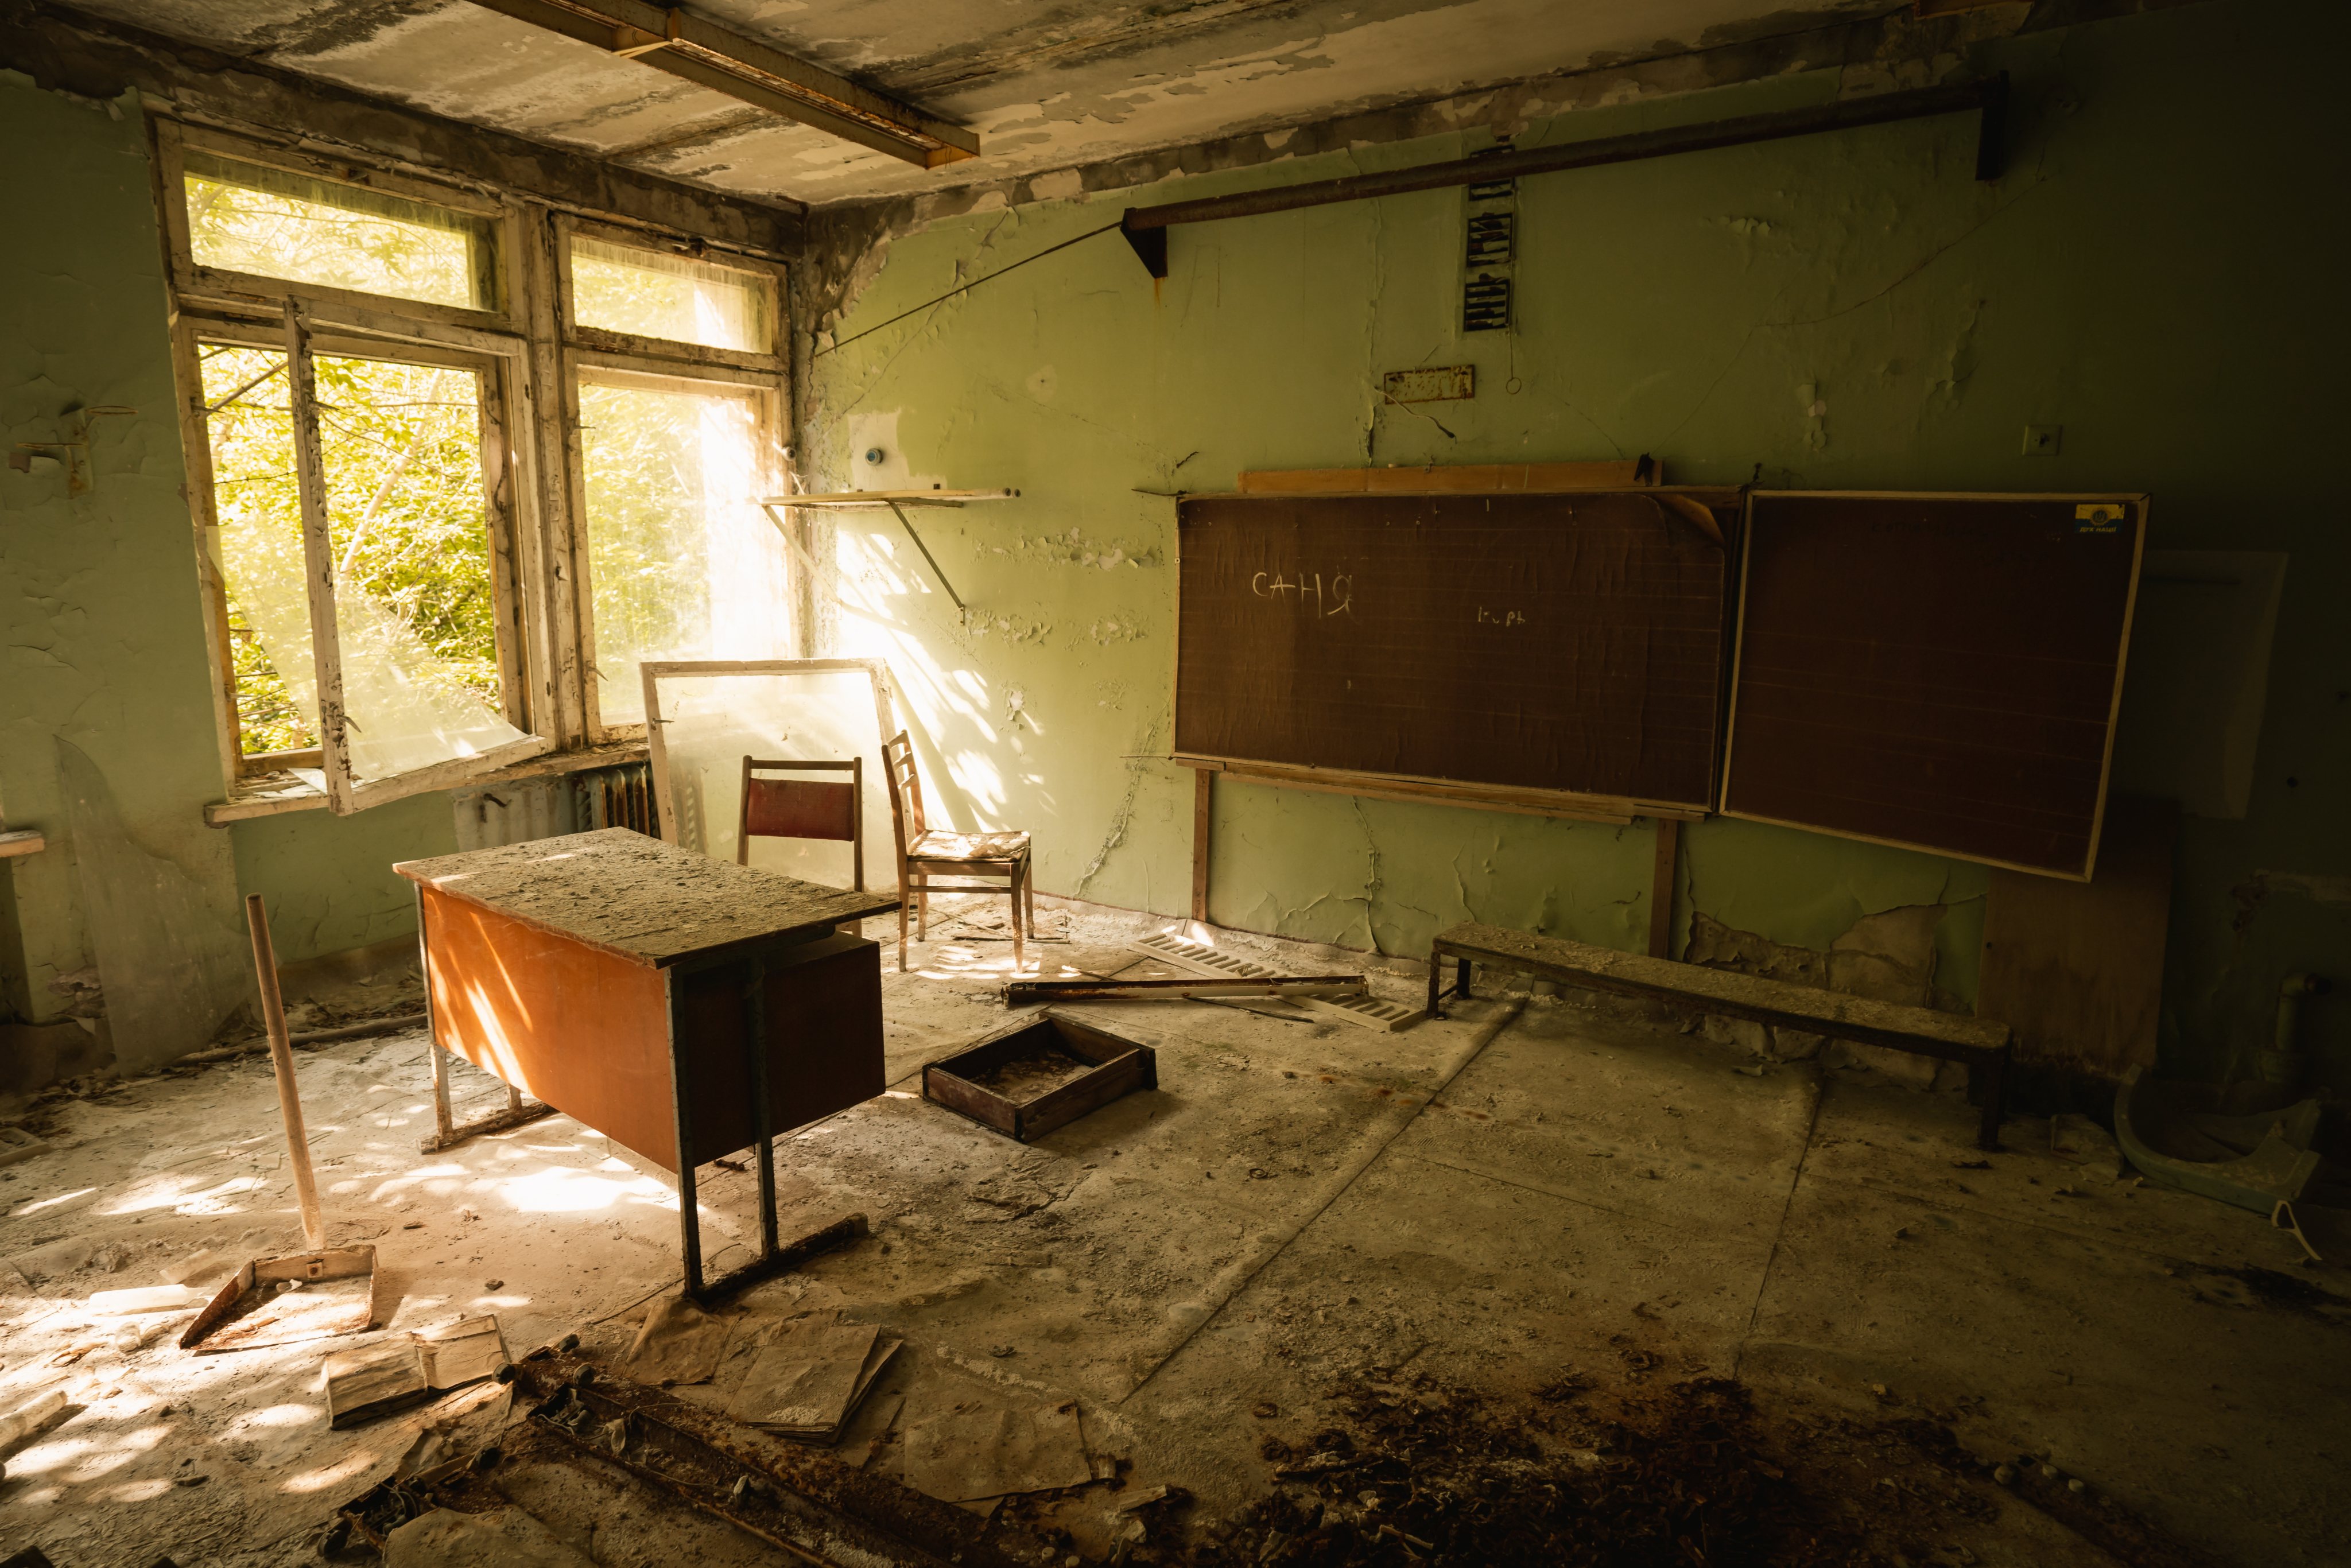 Classroom in the School of District 3 - Pripyat, Chernobyl Exclusion Zone, Ukraine